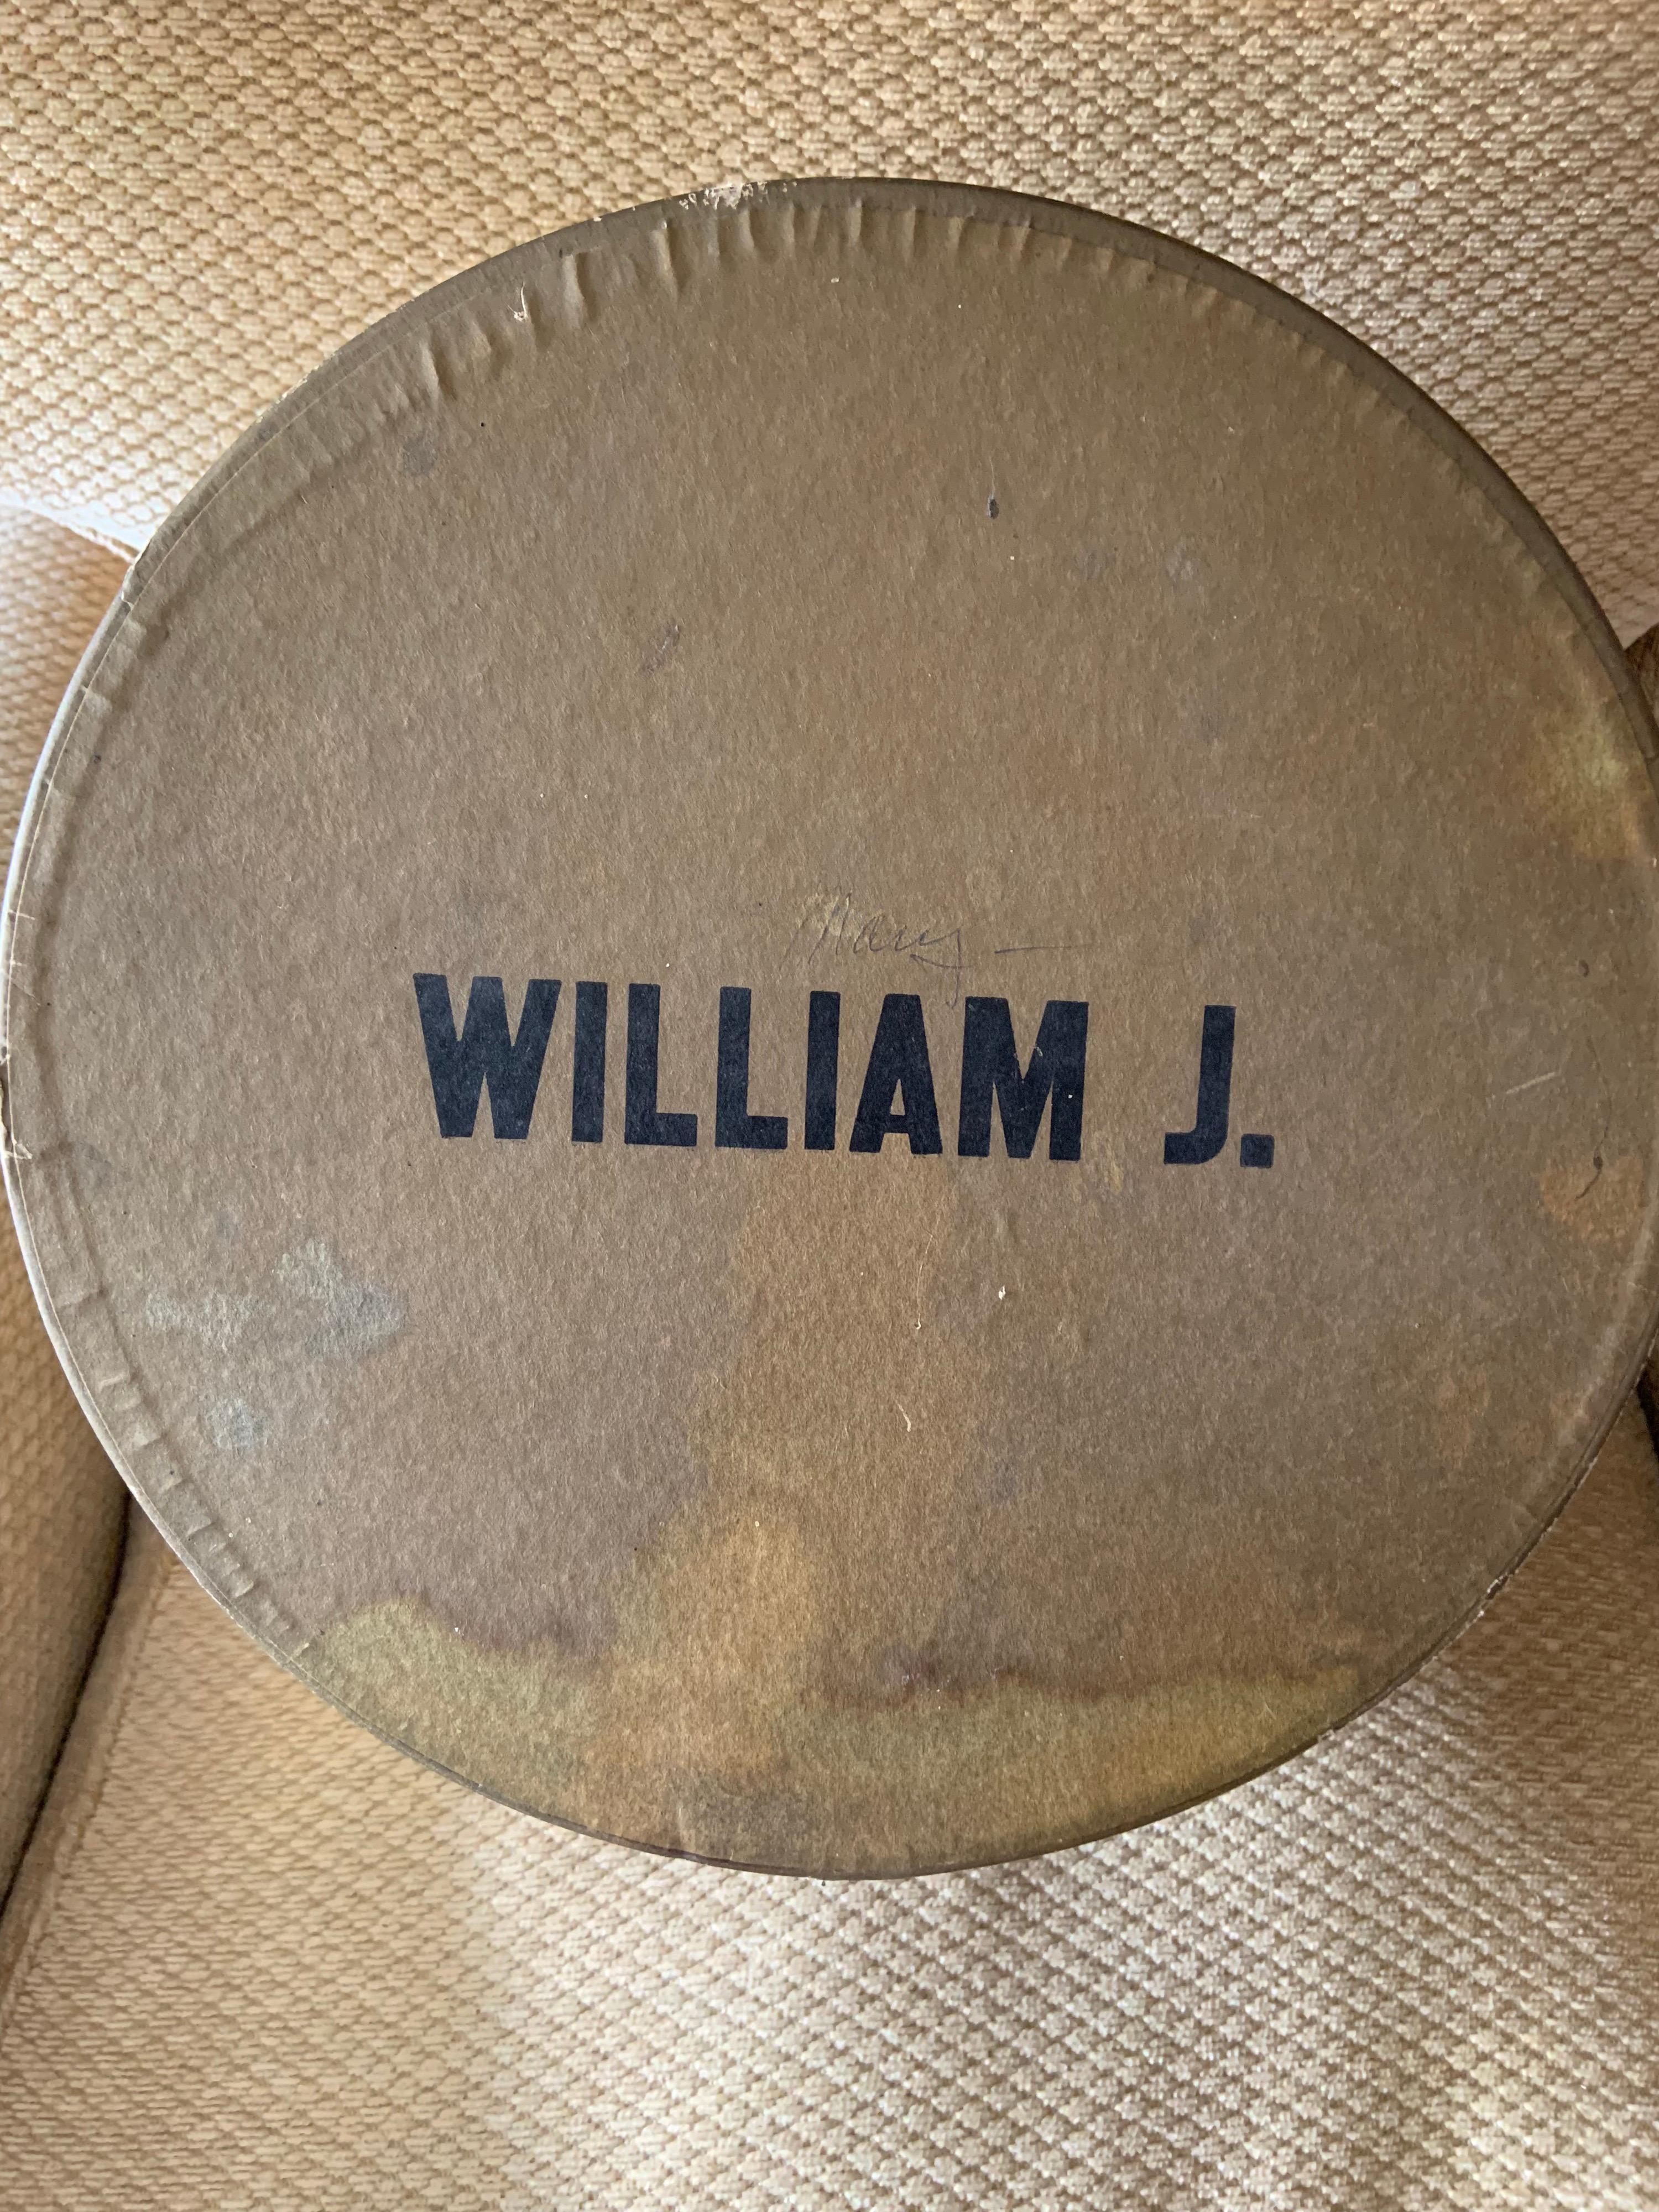 Black Bill Cunningham William J Polka Dot Velvet Hat in the Original William J Hatbox